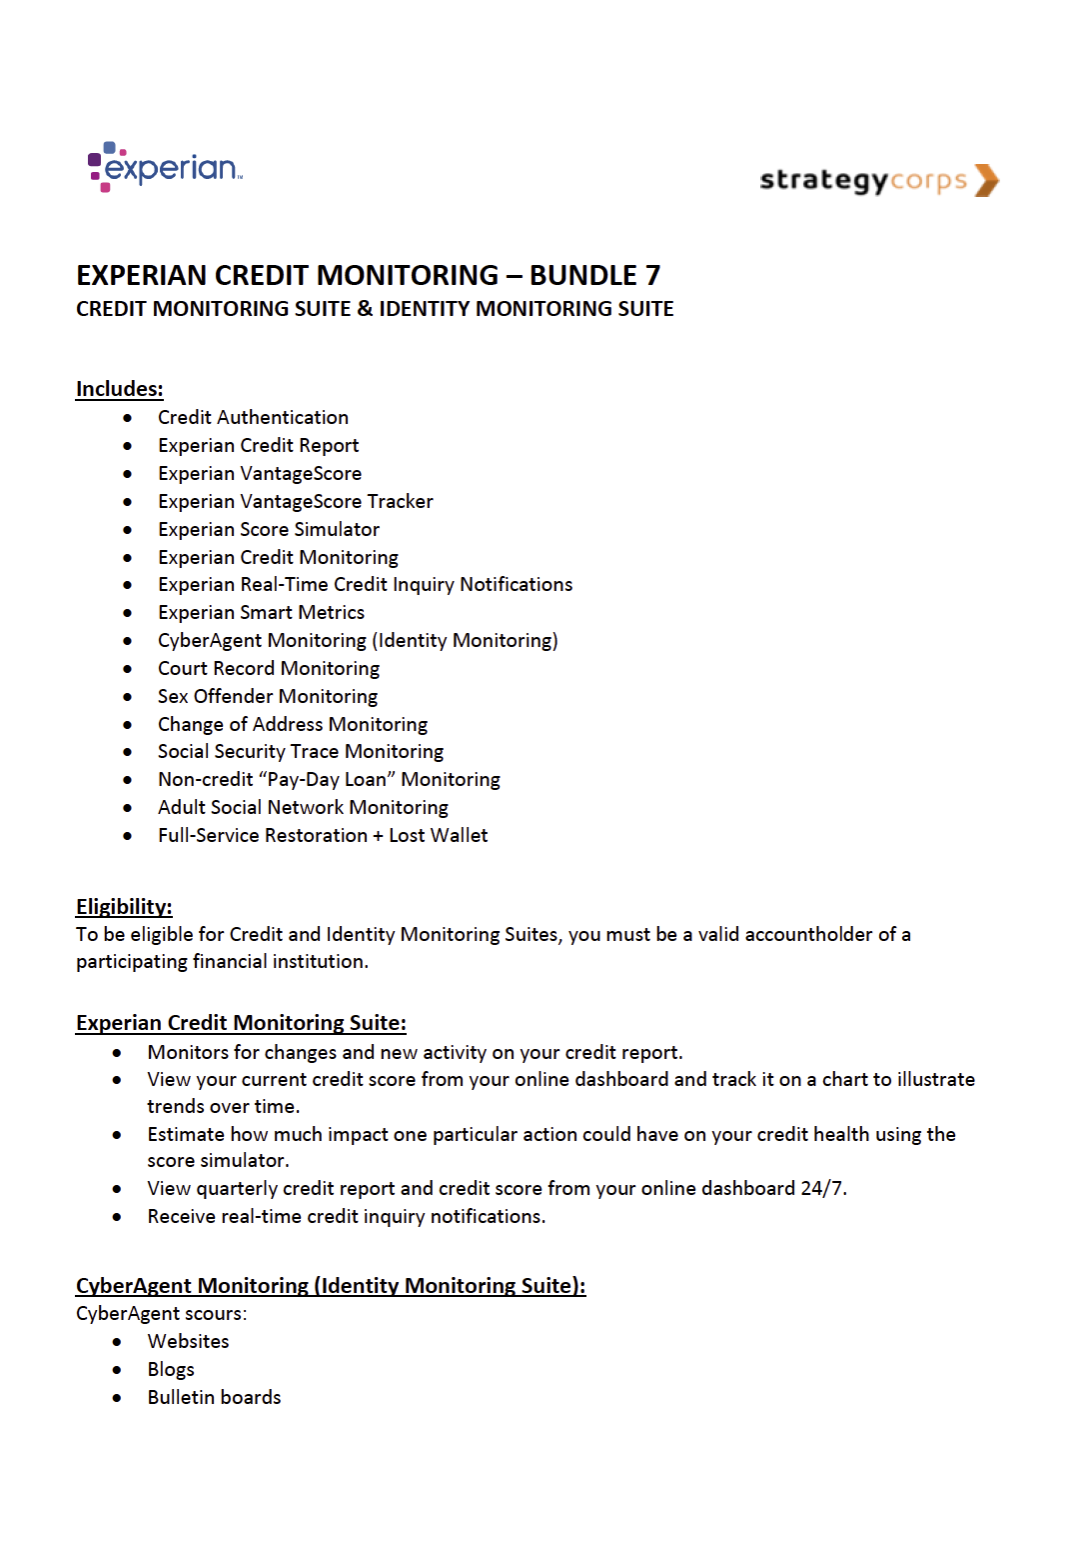 Experian Credit & Identity Monitoring - Bundle 7